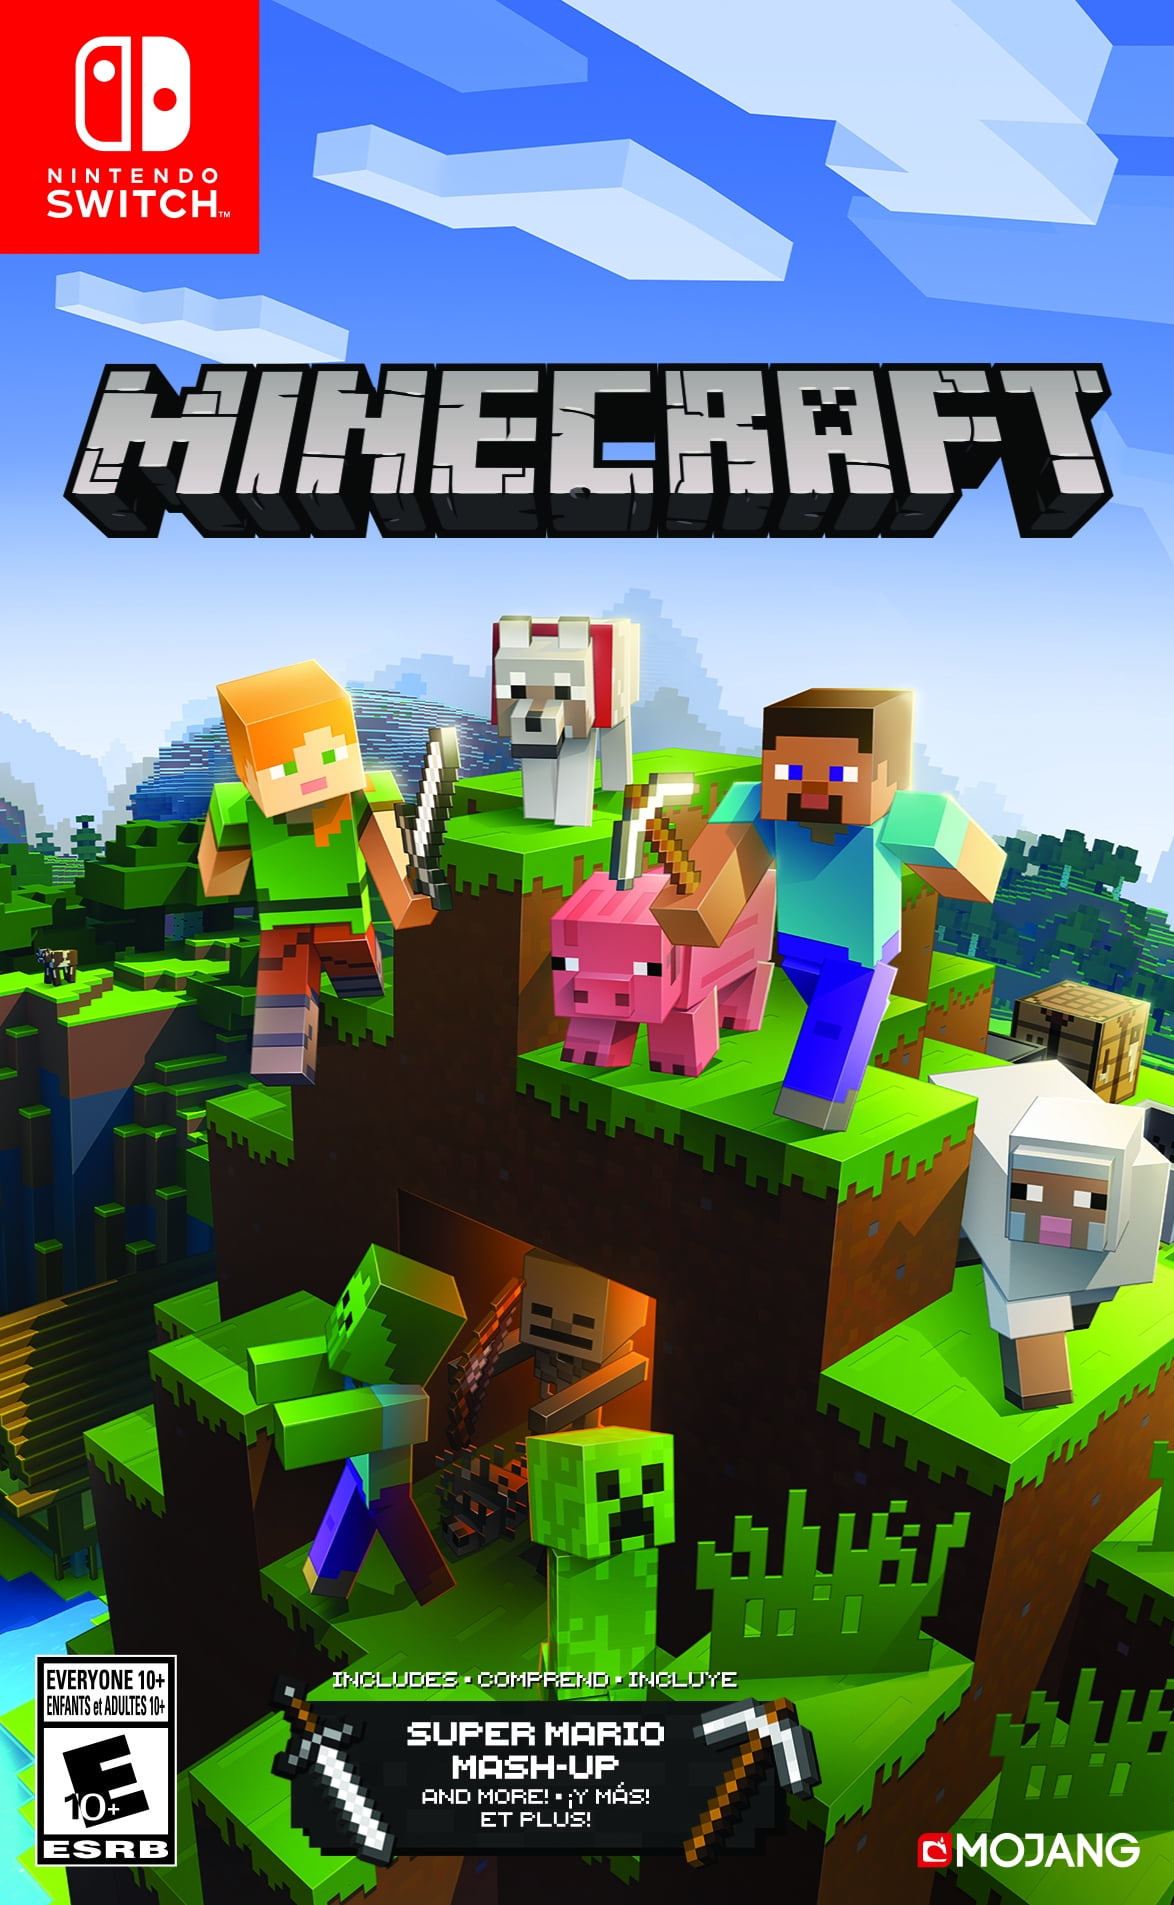 Minecraft Java & Bedrock Edition Windows 10 [Digital Code]